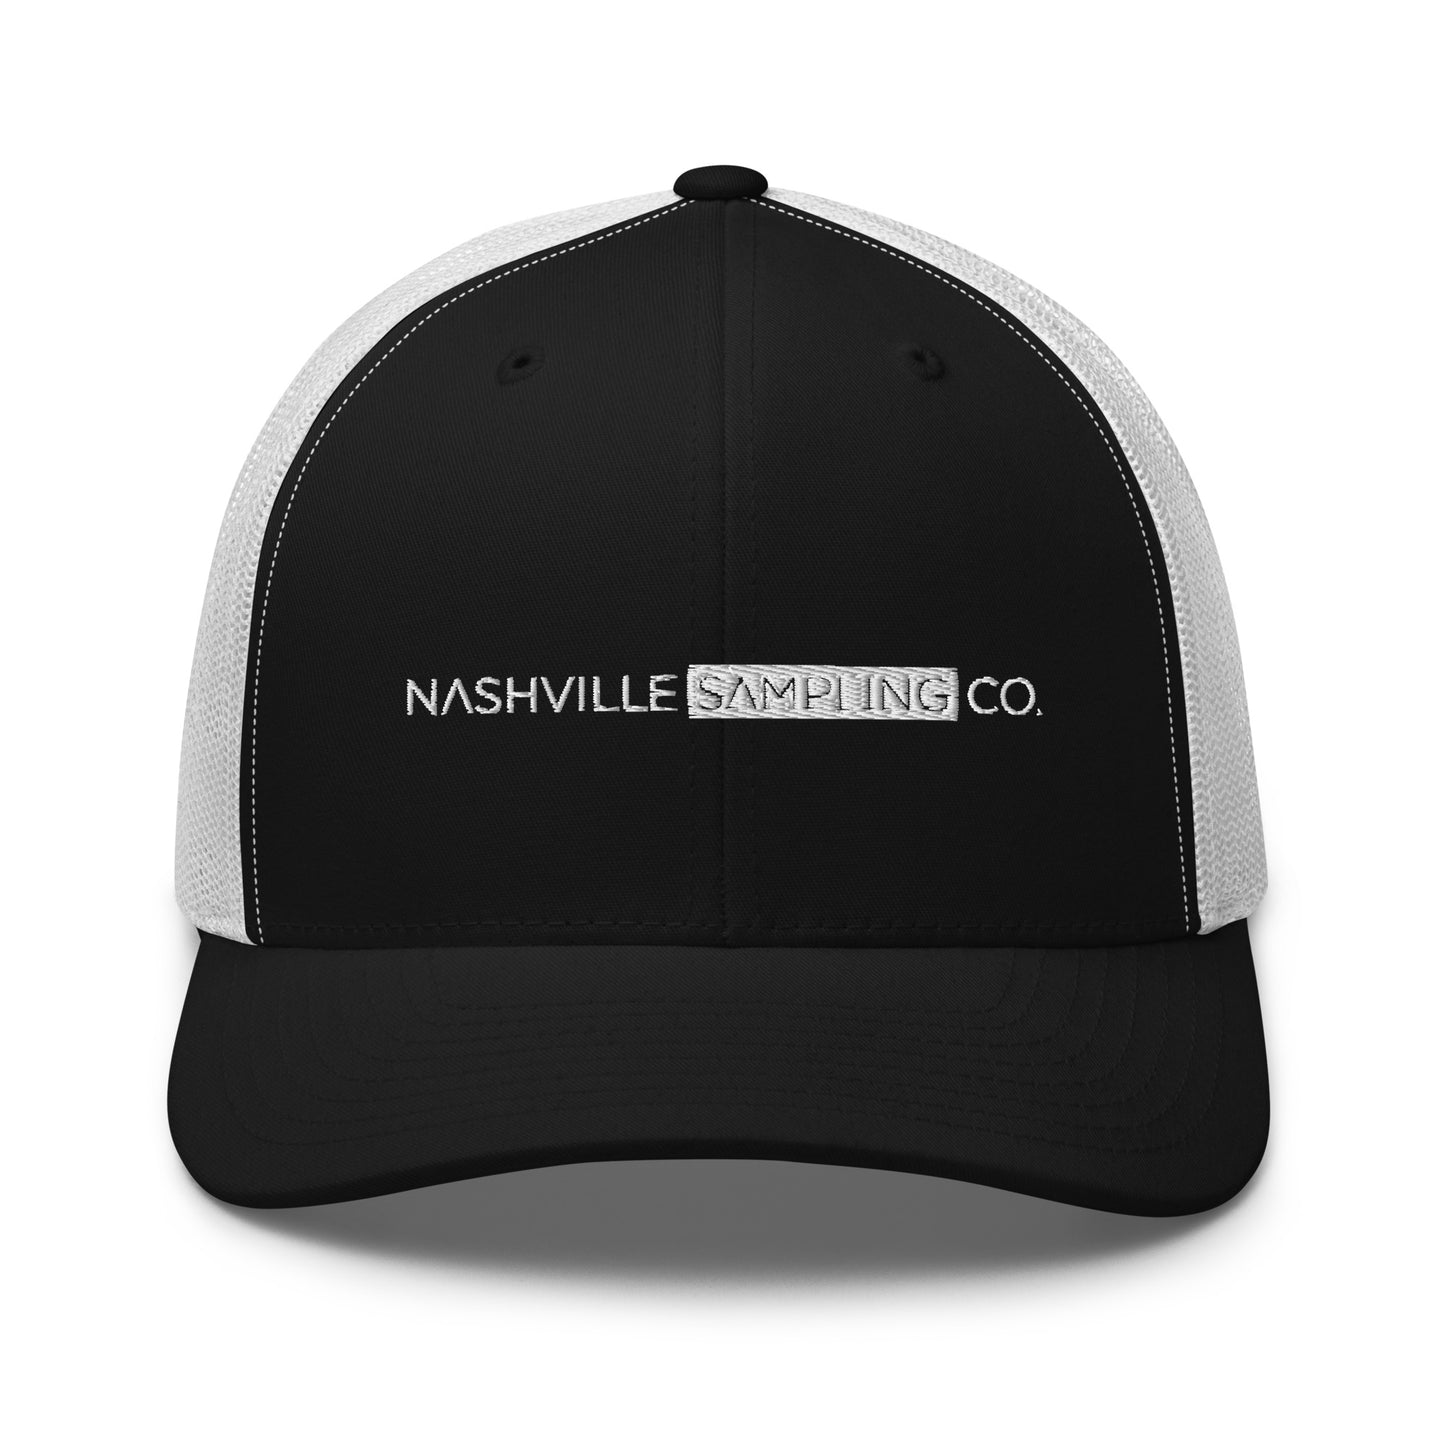 Nashville Sampling Co Embroidered Trucker Cap